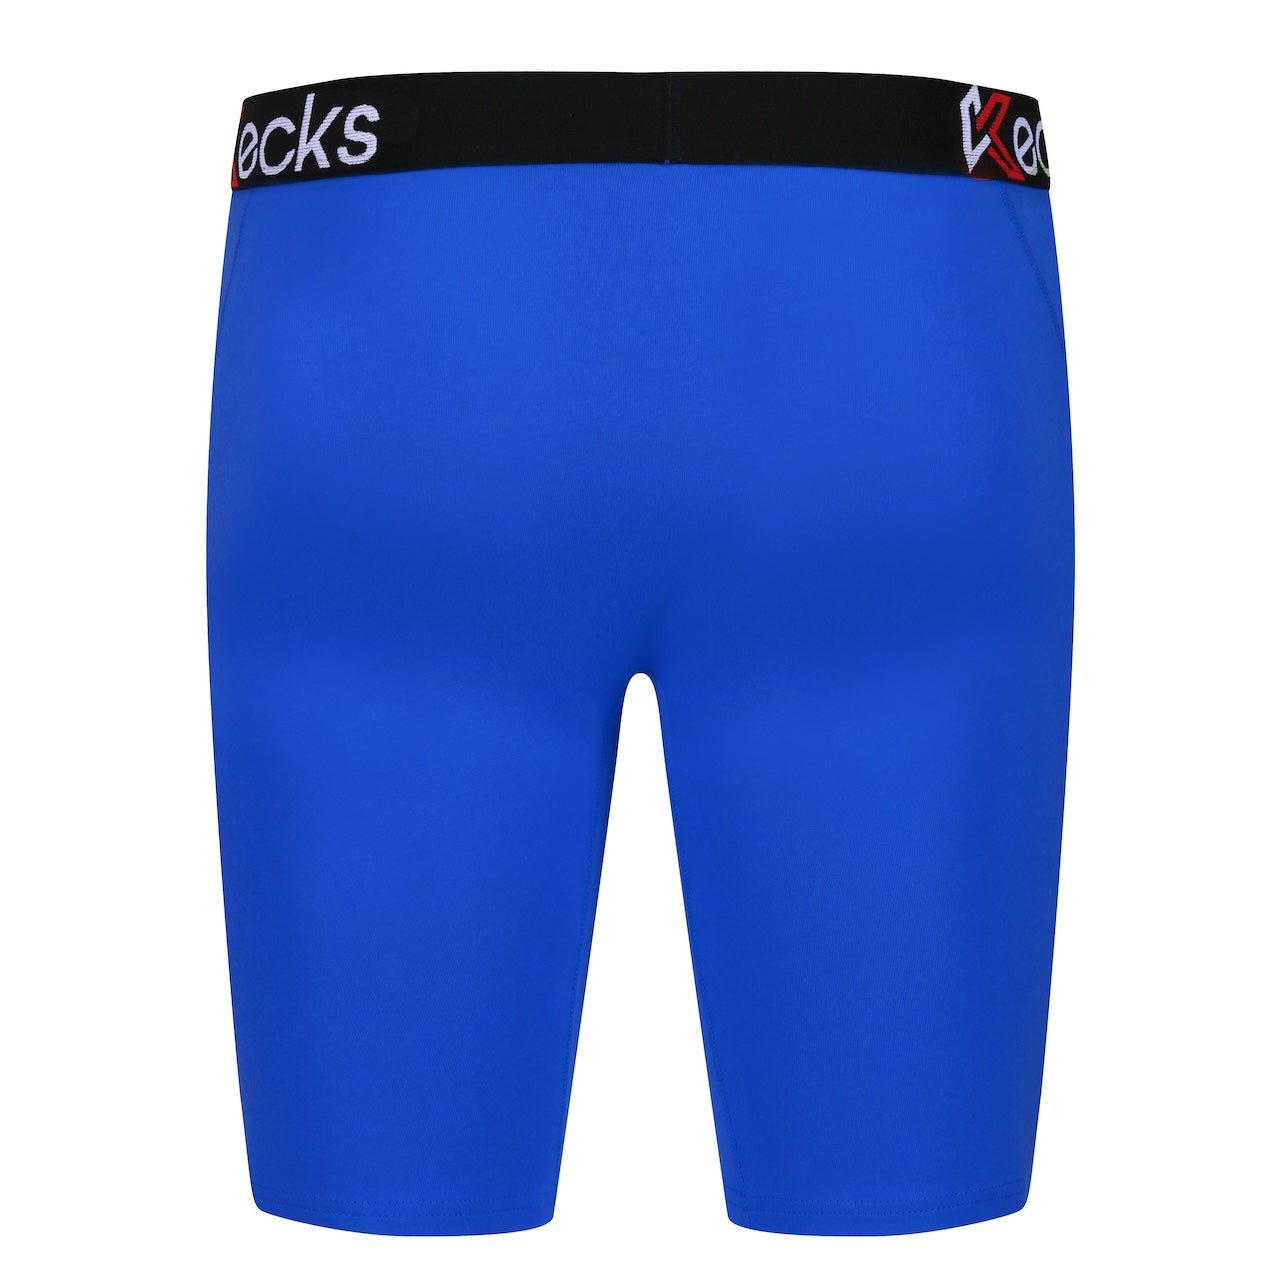 3 Pack Blue Boxer Shorts - Kecks